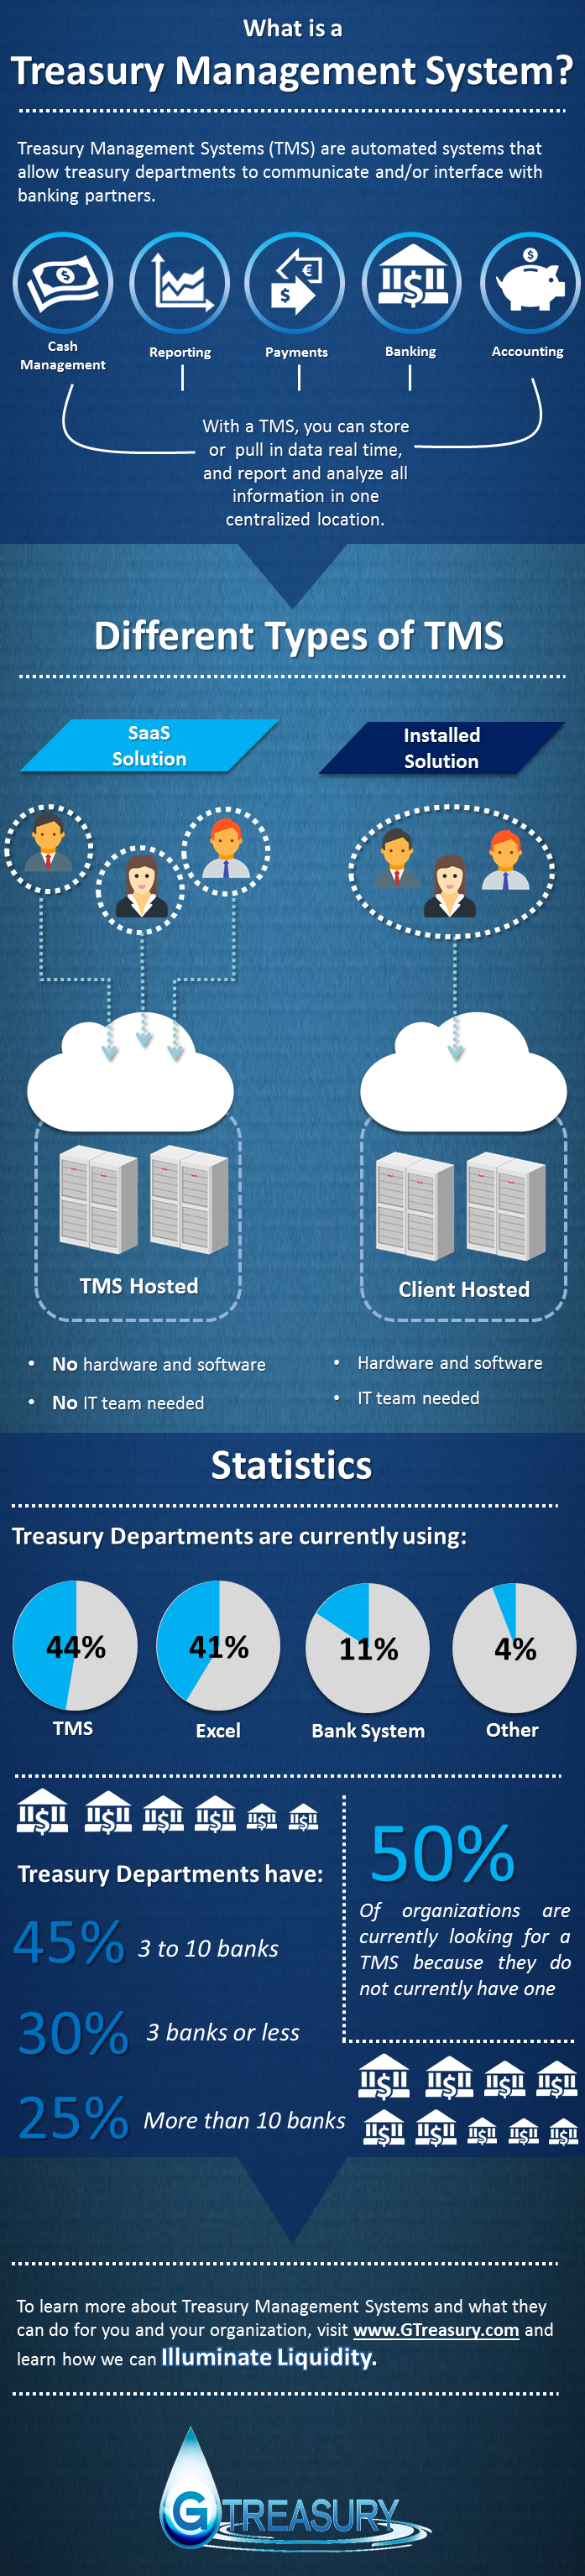 The Basics of Treasury Management Systems - Image 1